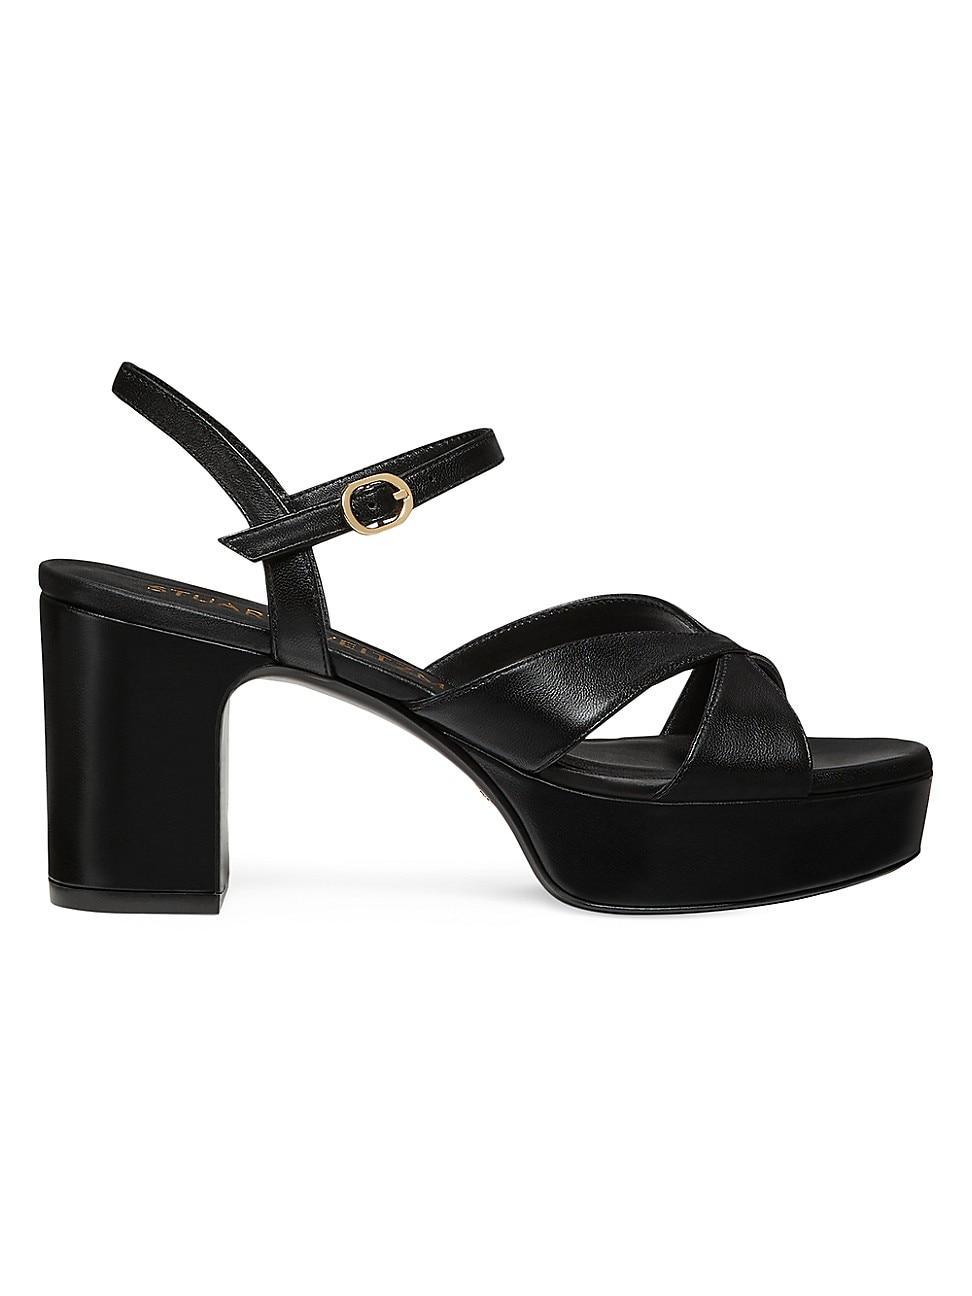 Stuart Weitzman Womens Carmen Midi Platform Black Sandals Product Image